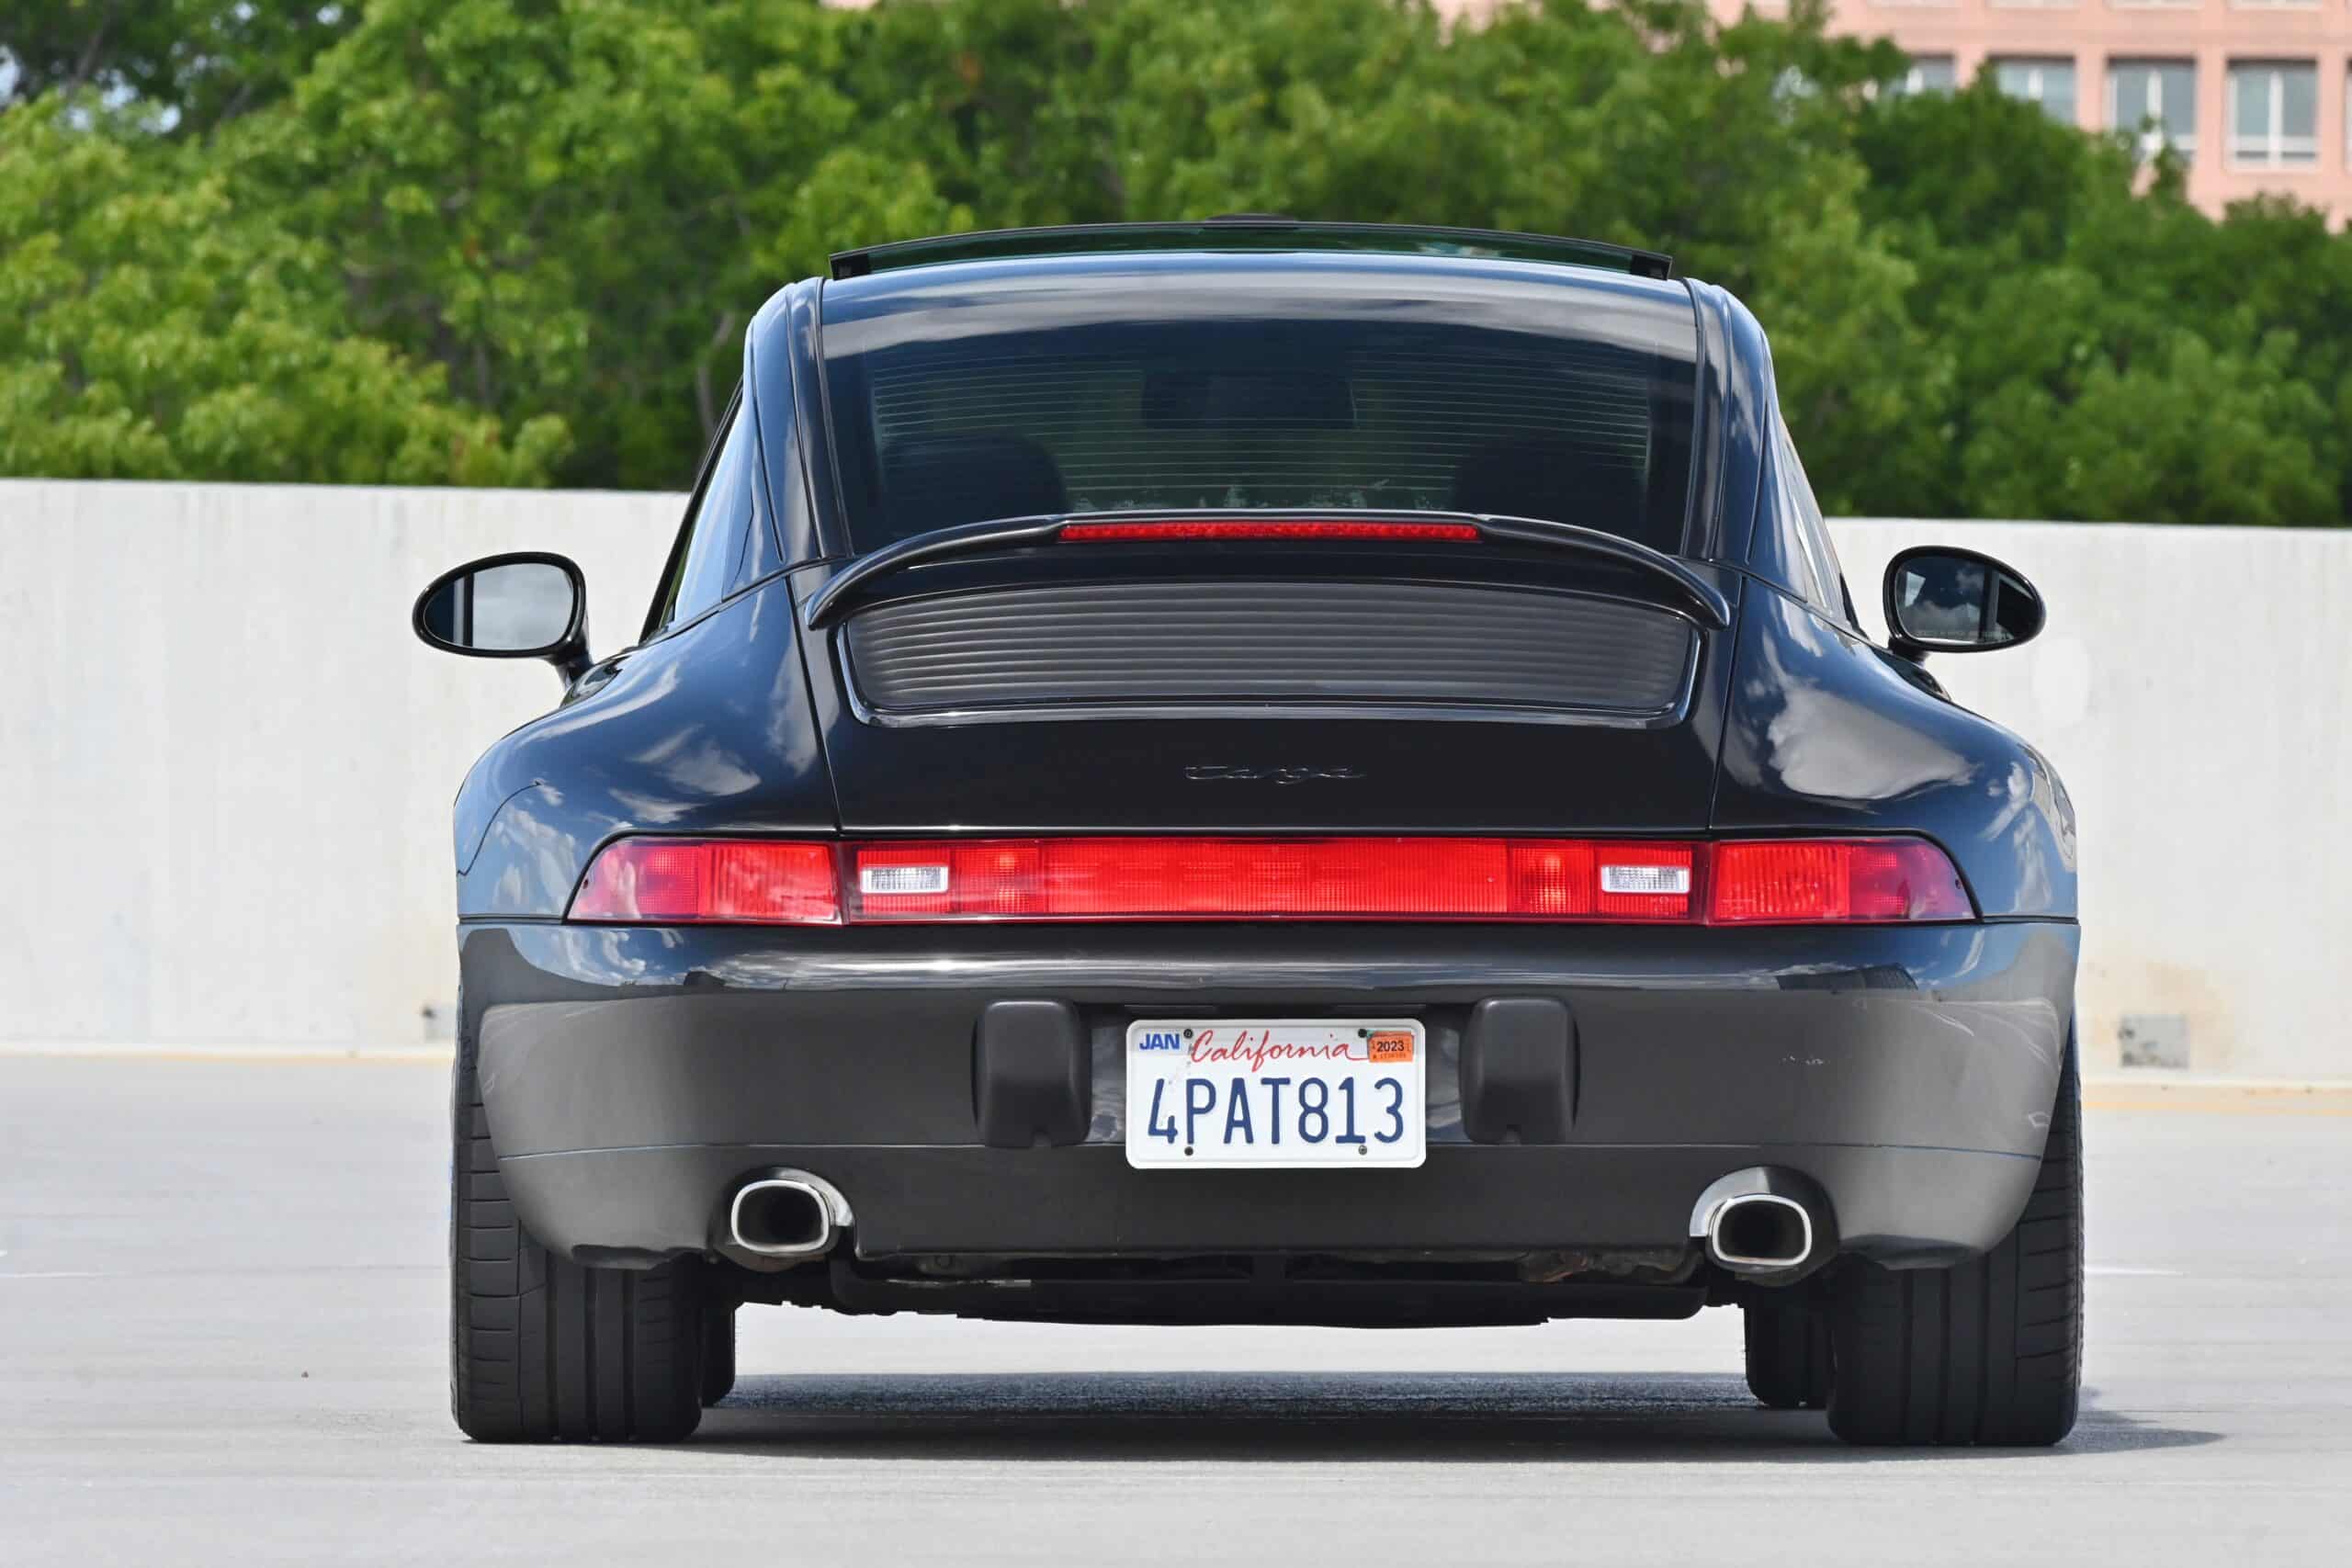 1996 Porsche 911 993 Targa 1 of 462 US cars – 2 Owner – California Car – 6 Speed Manual – Like NEW